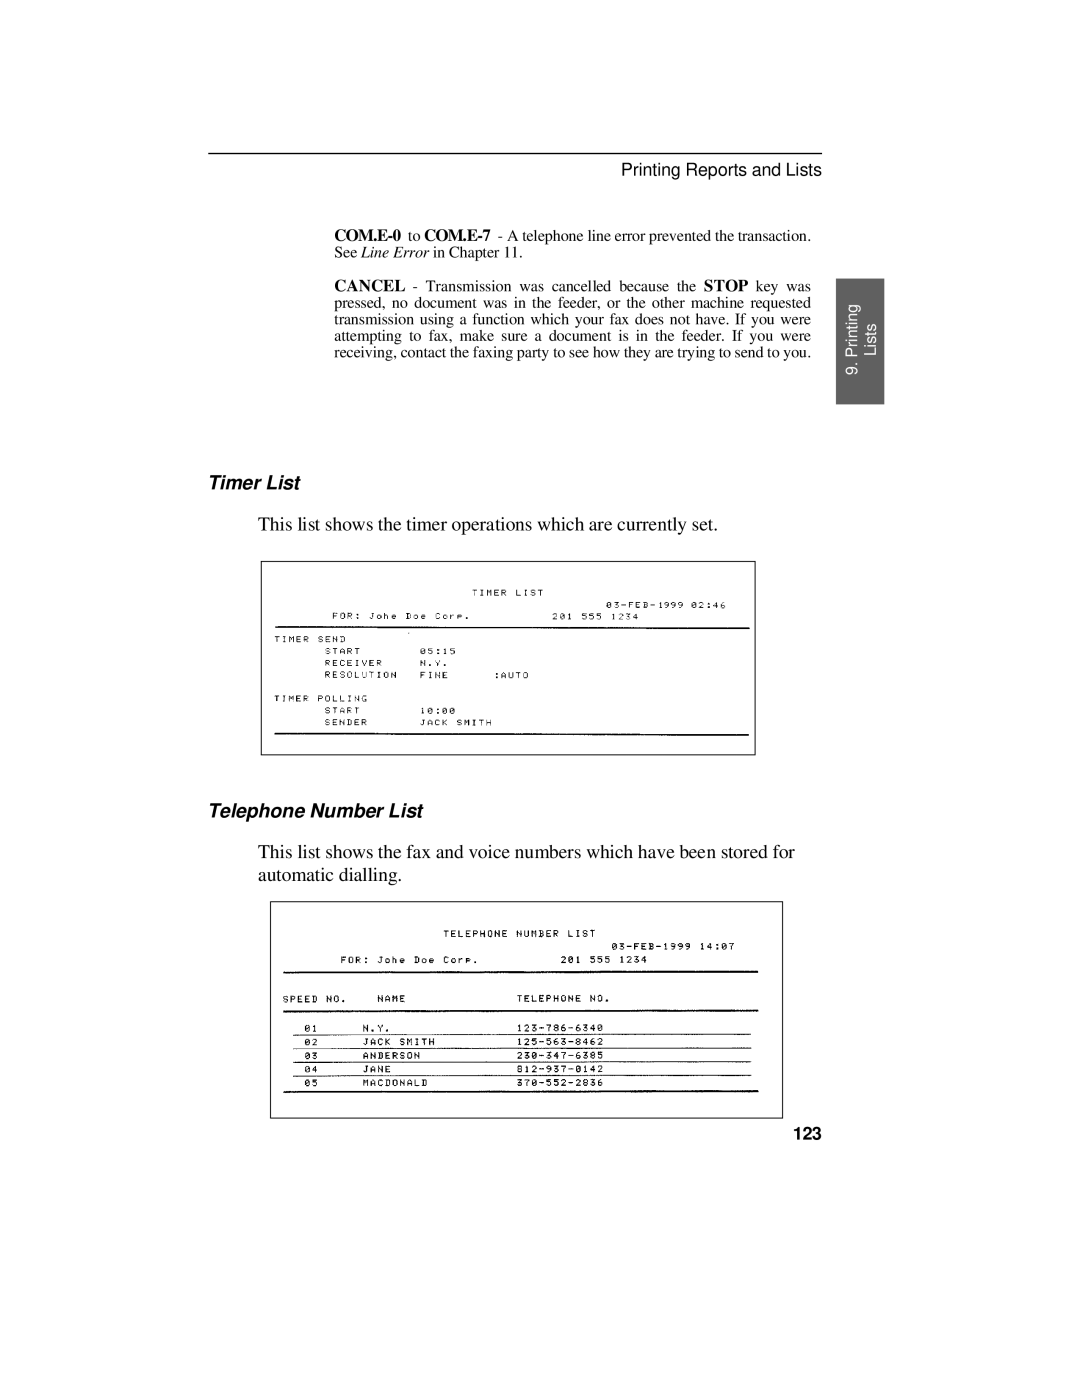 Sharp UX-470 operation manual Timer List, Telephone Number List, 123 